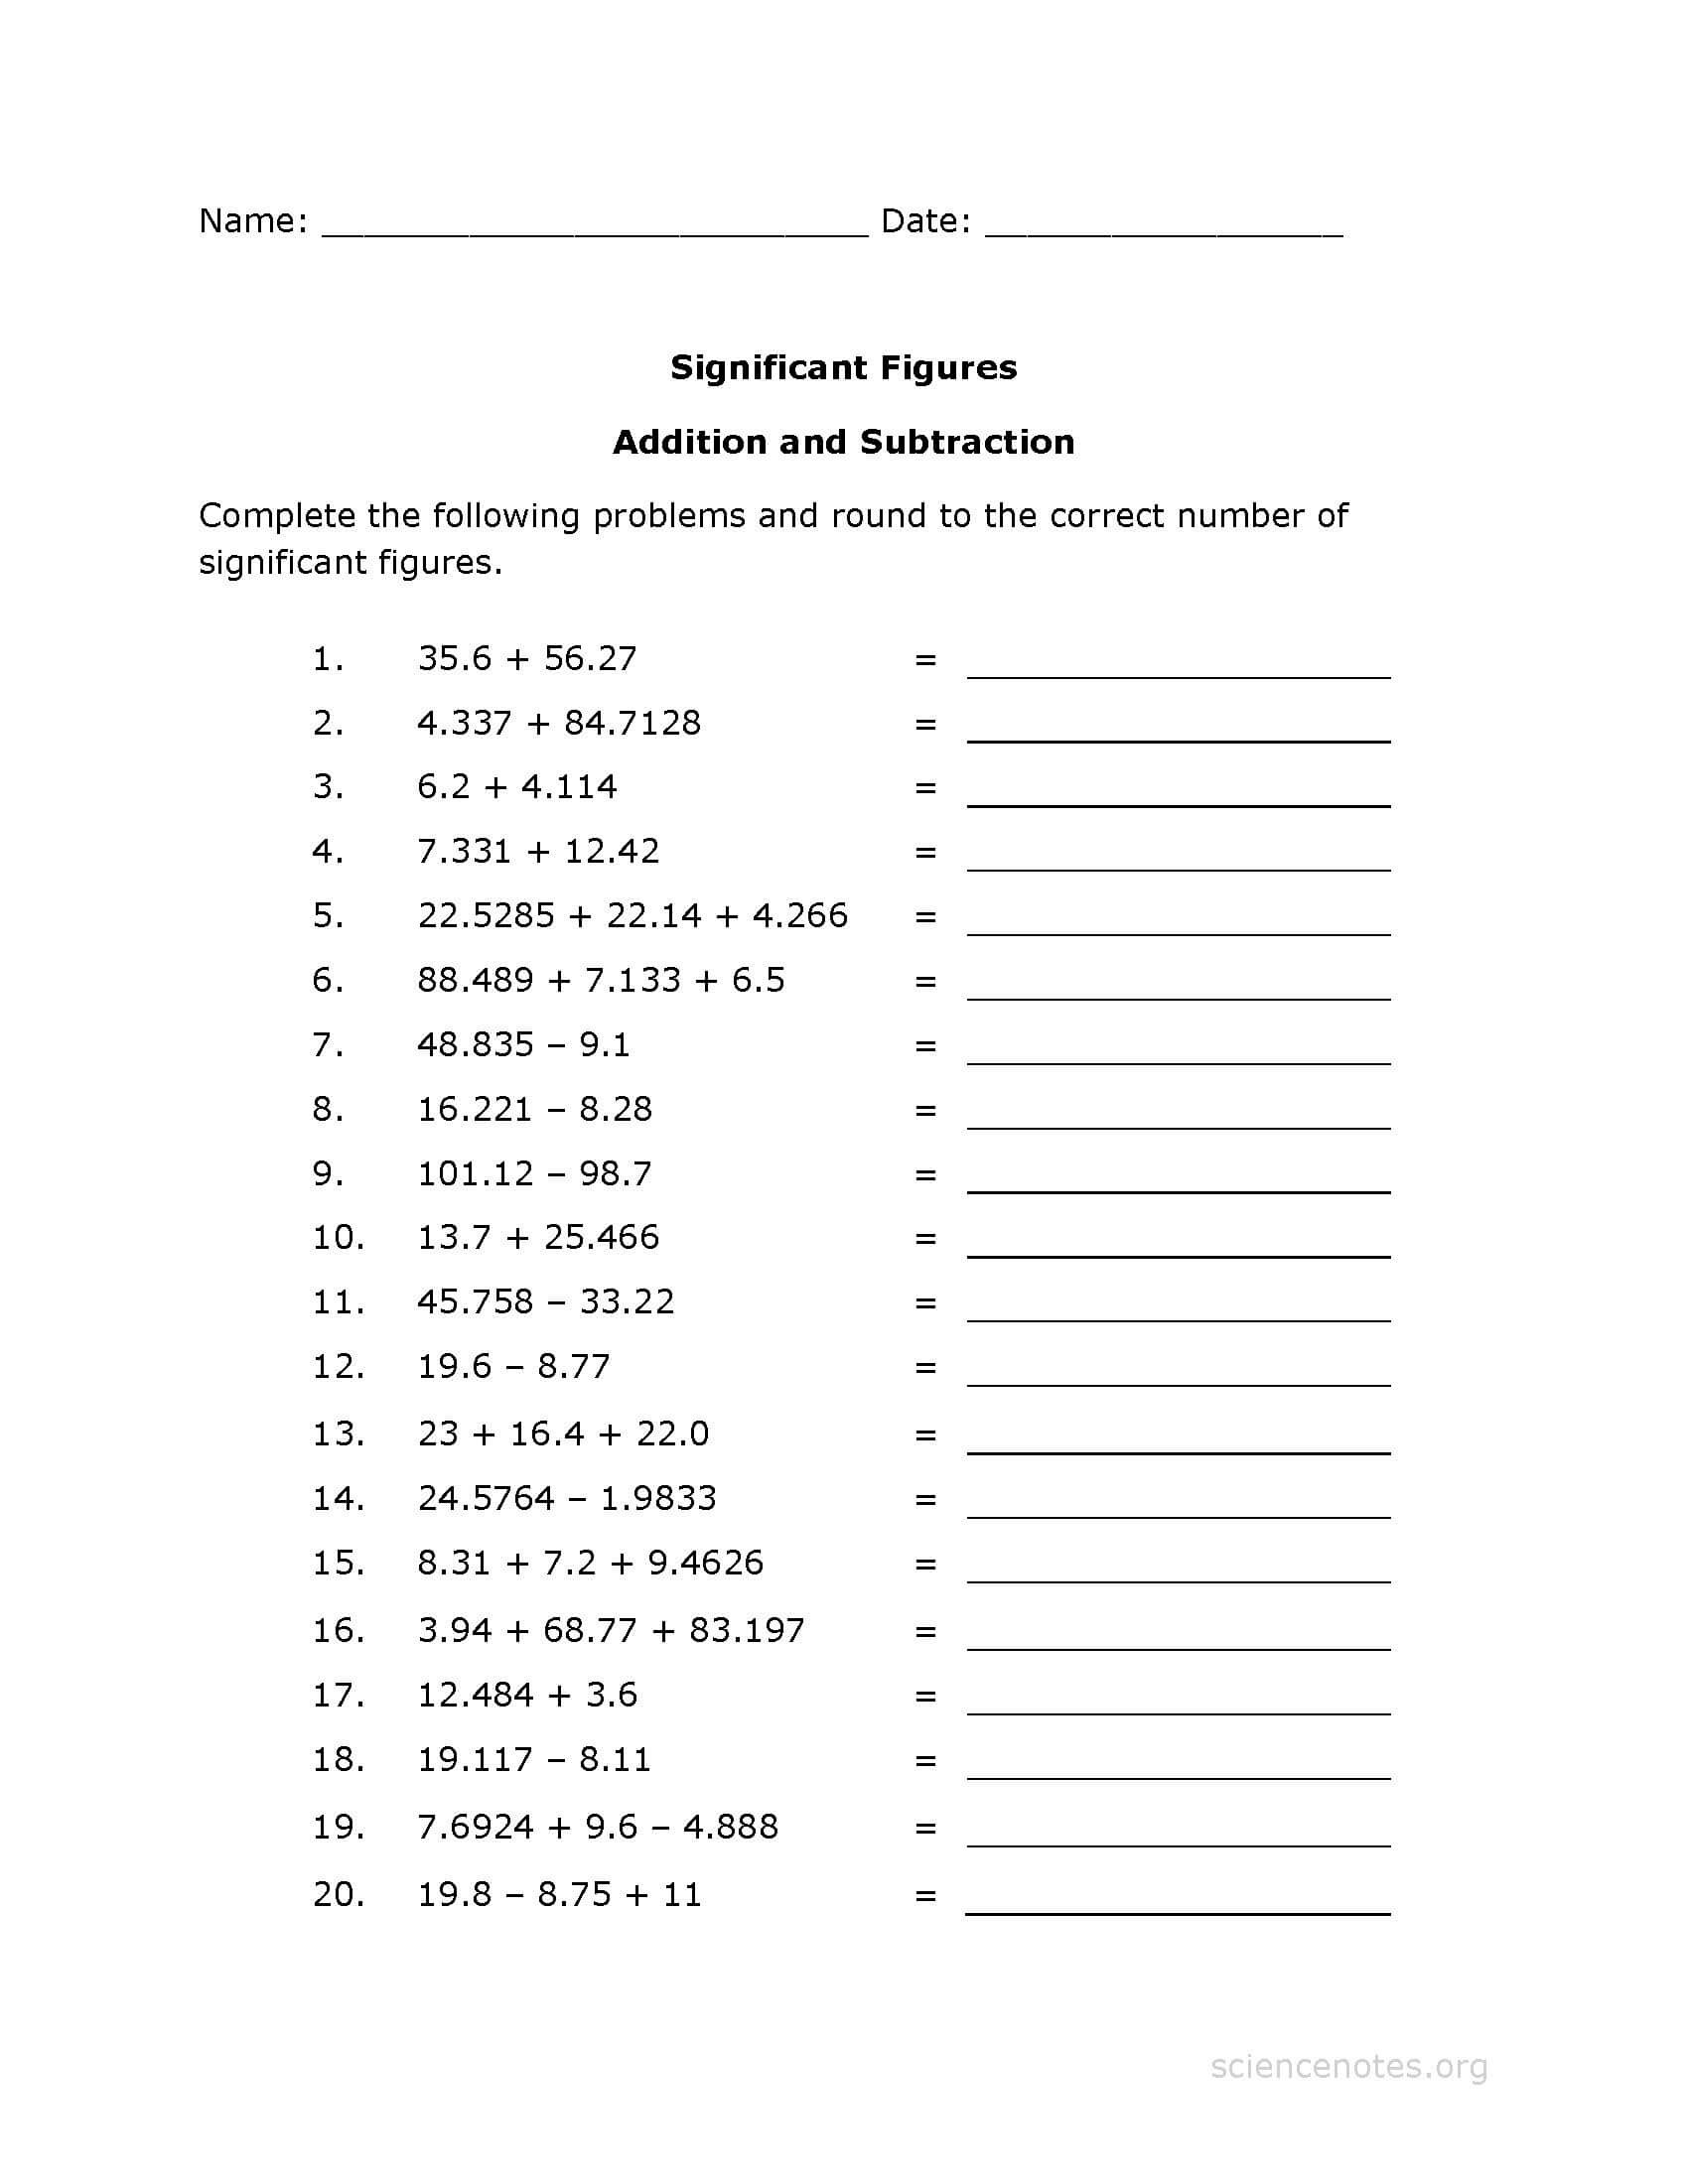 Scientific Notation Worksheet Chemistry Significant Figures Worksheet Pdf Addition Practice